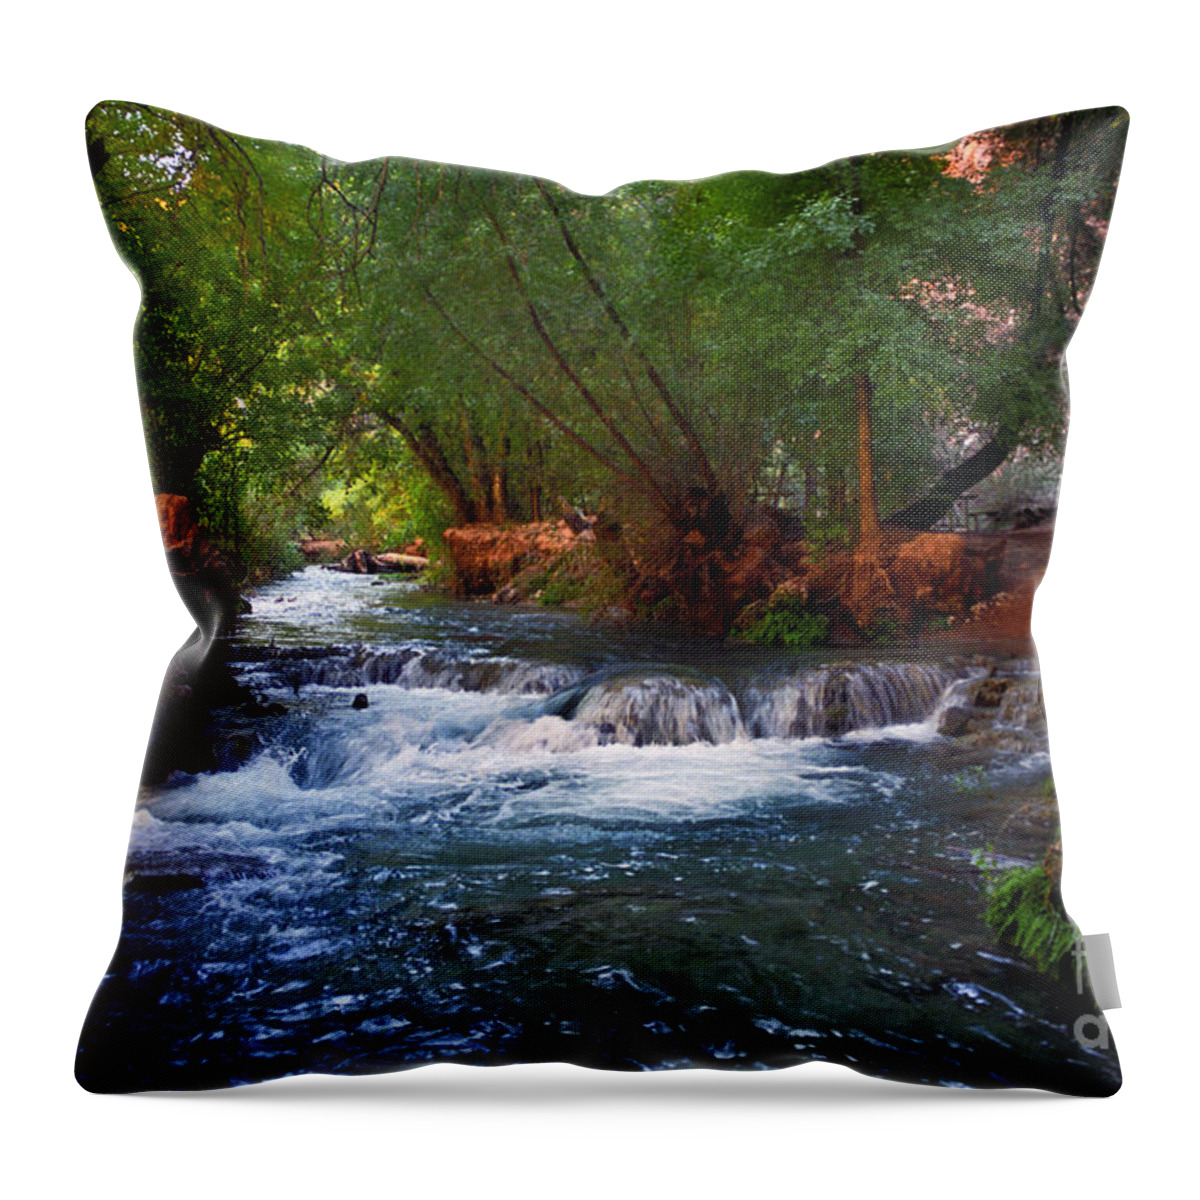 Arizona Throw Pillow featuring the photograph Havasu Creek by Kathy McClure